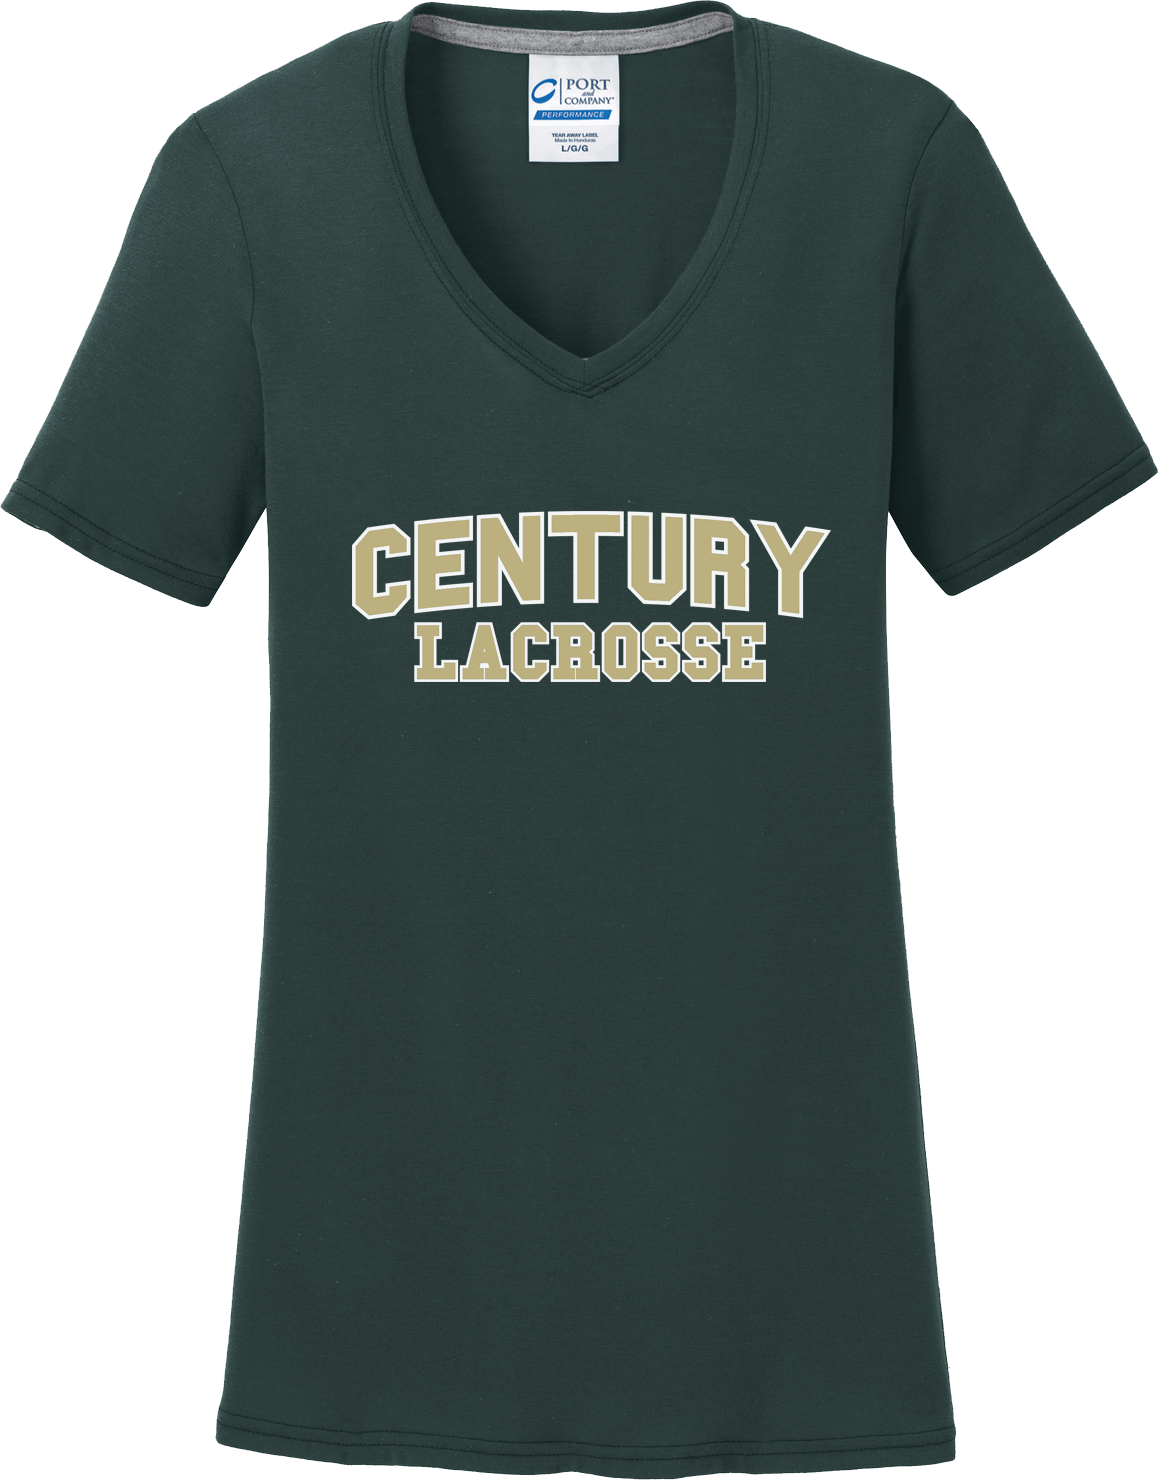 Century Lacrosse Women's Dark Green T-Shirt